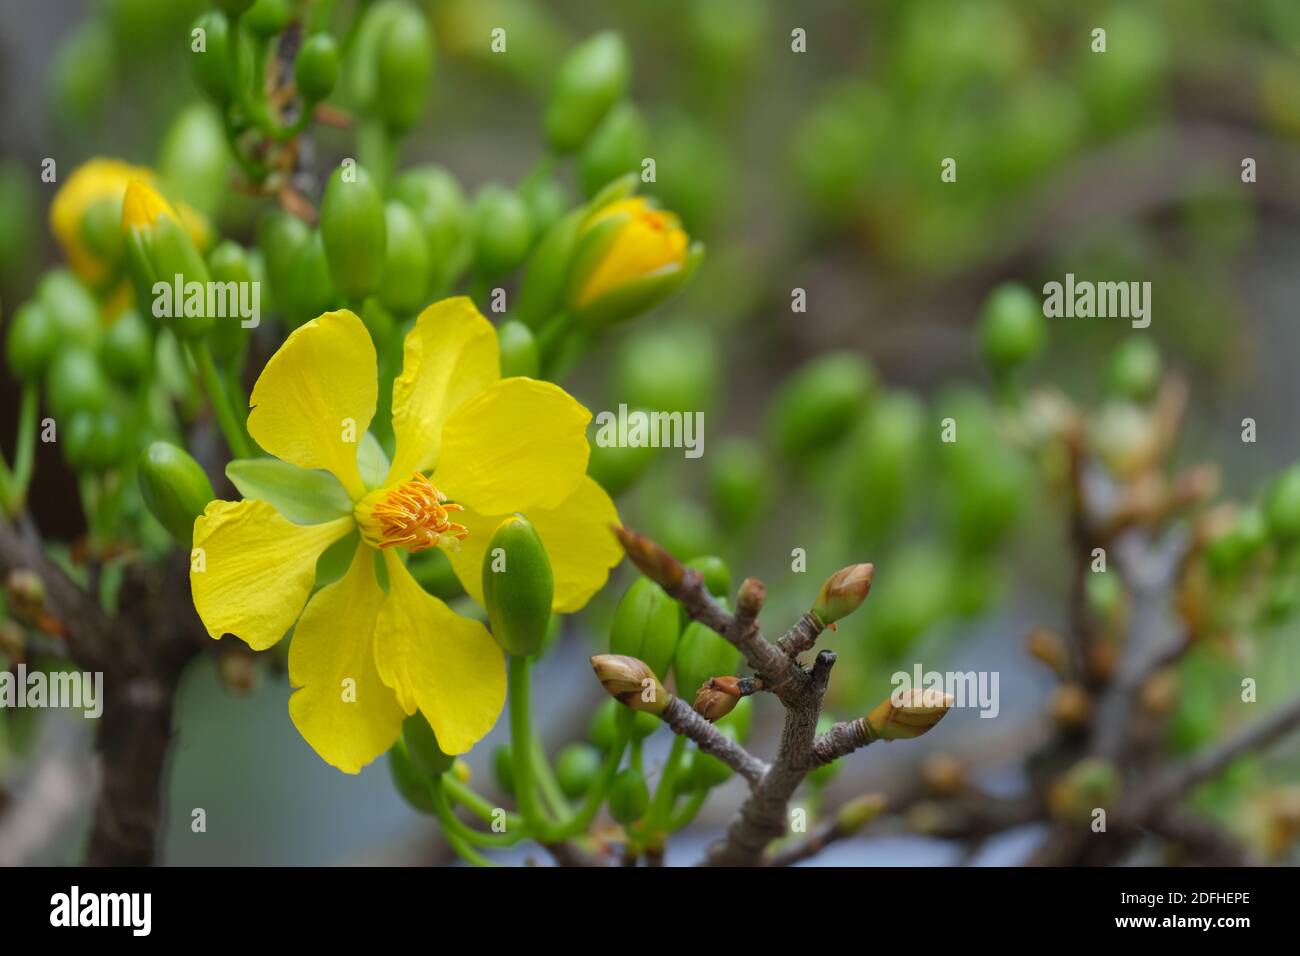 Royalty high quality free image of Ochnaceae. Ochna integerrima is symbol of Vietnamese traditional lunar New Year. Mai flower in Vietnamese Stock Photo